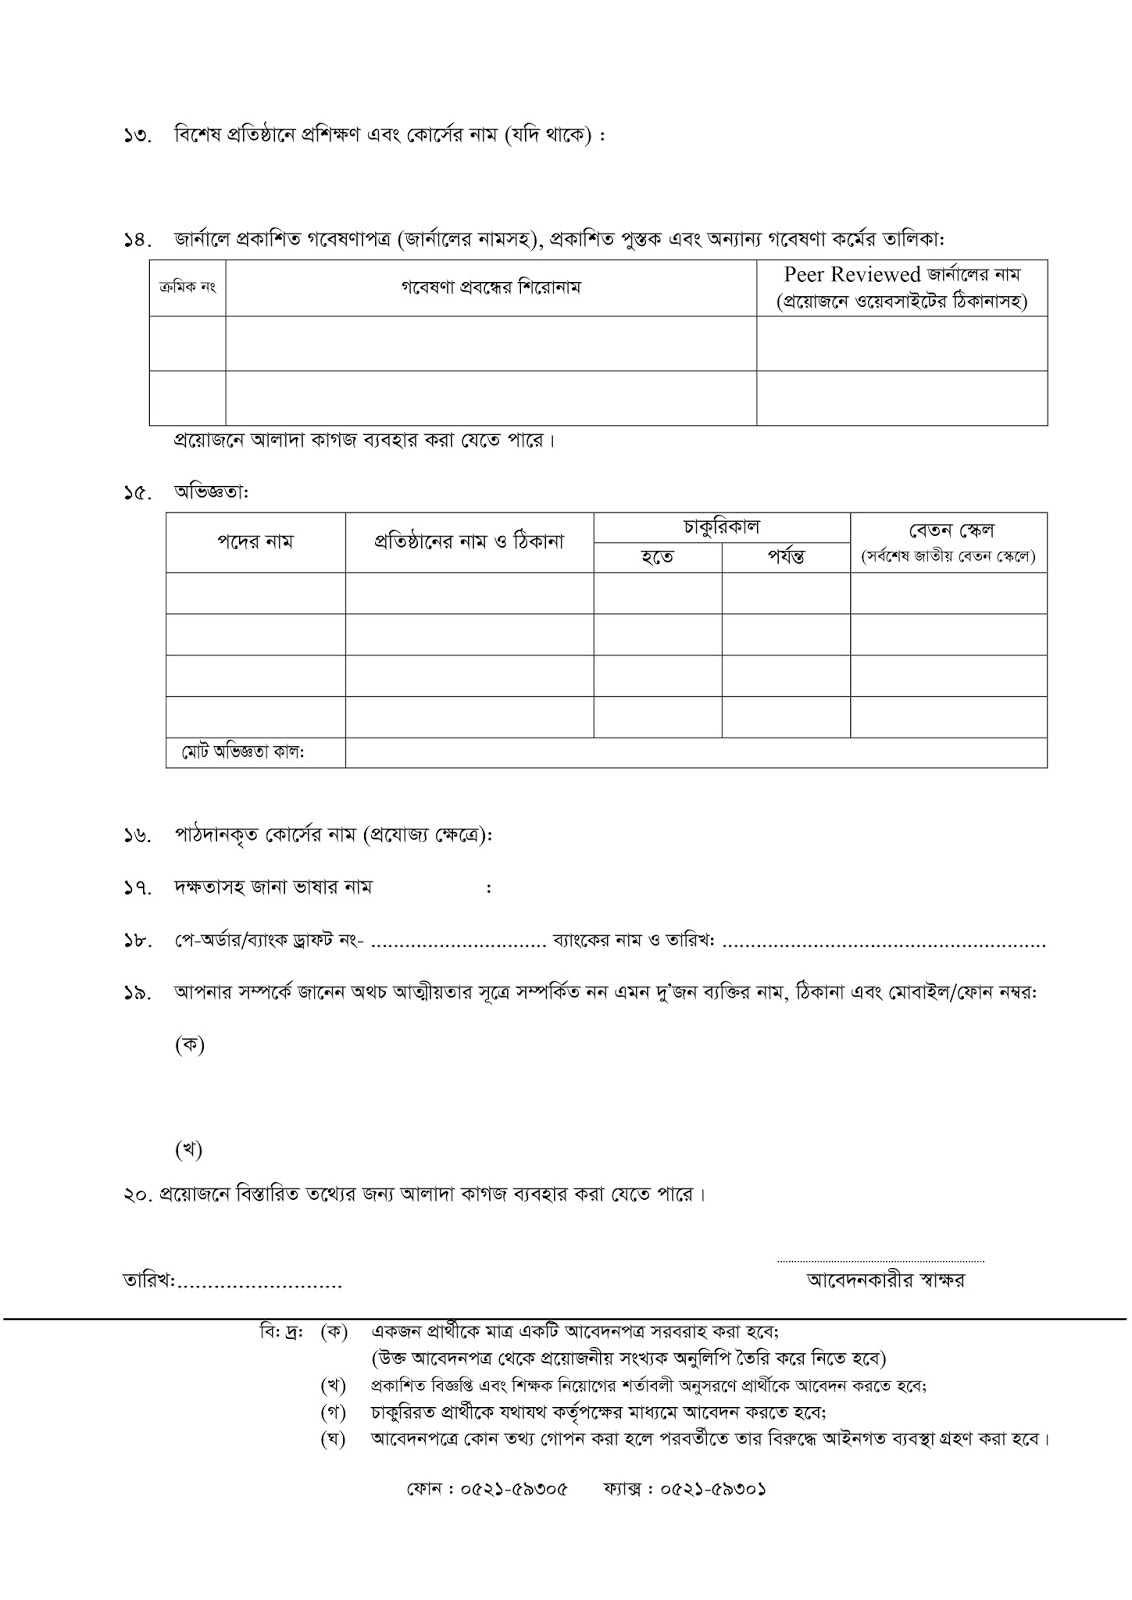 Begum Rokeya University, Rangpur (BRUR) Application Form